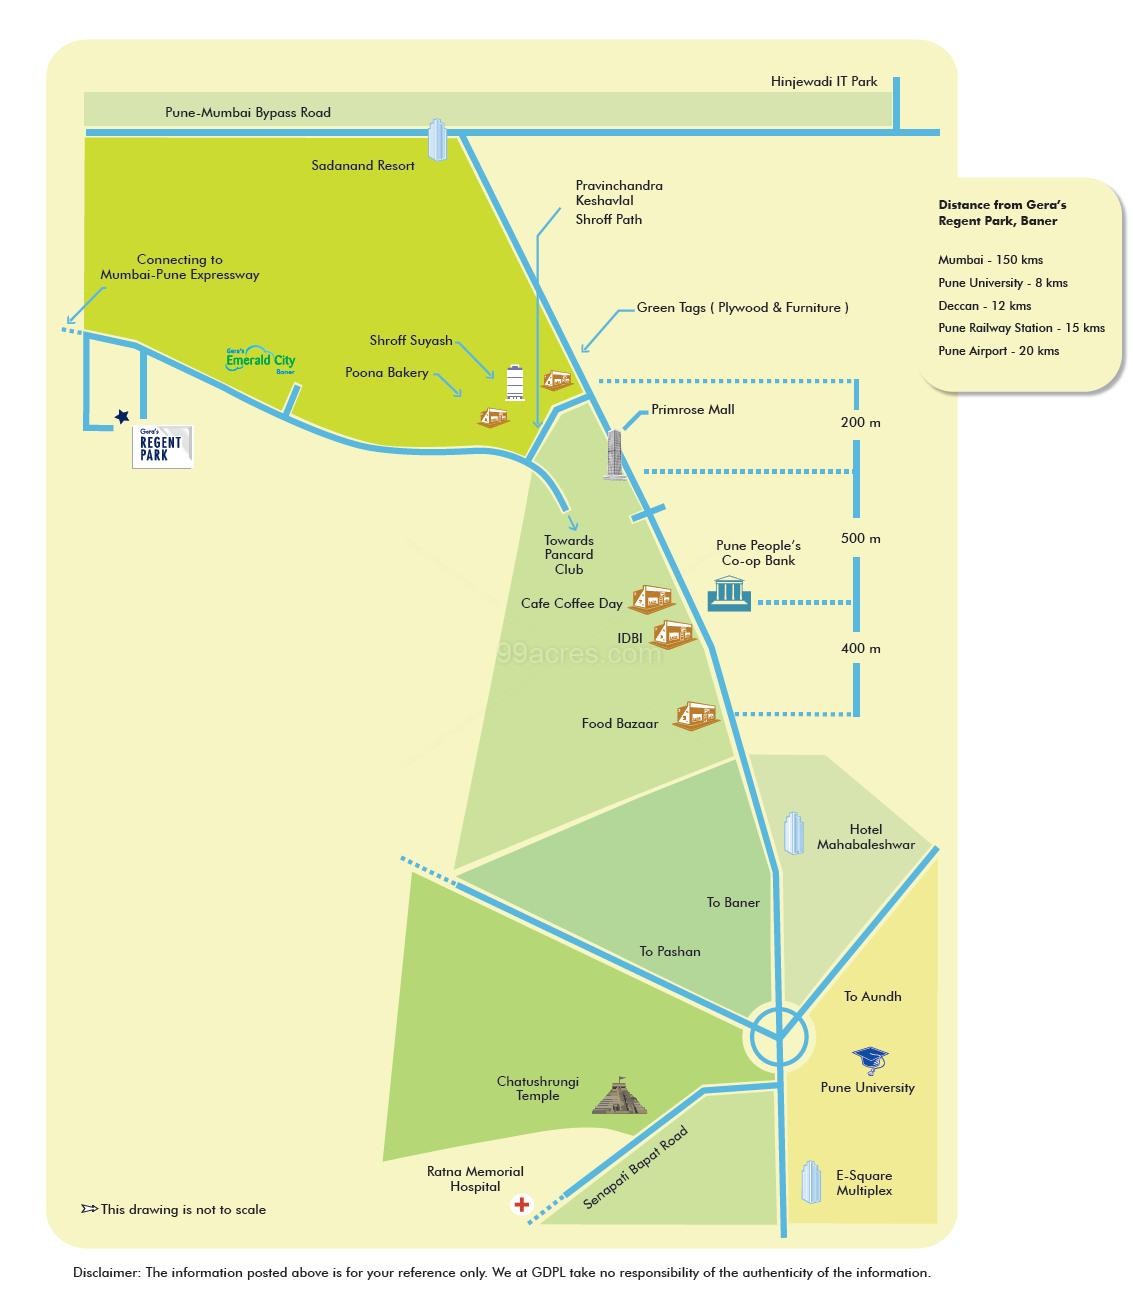 Gera Regent Park Location Map